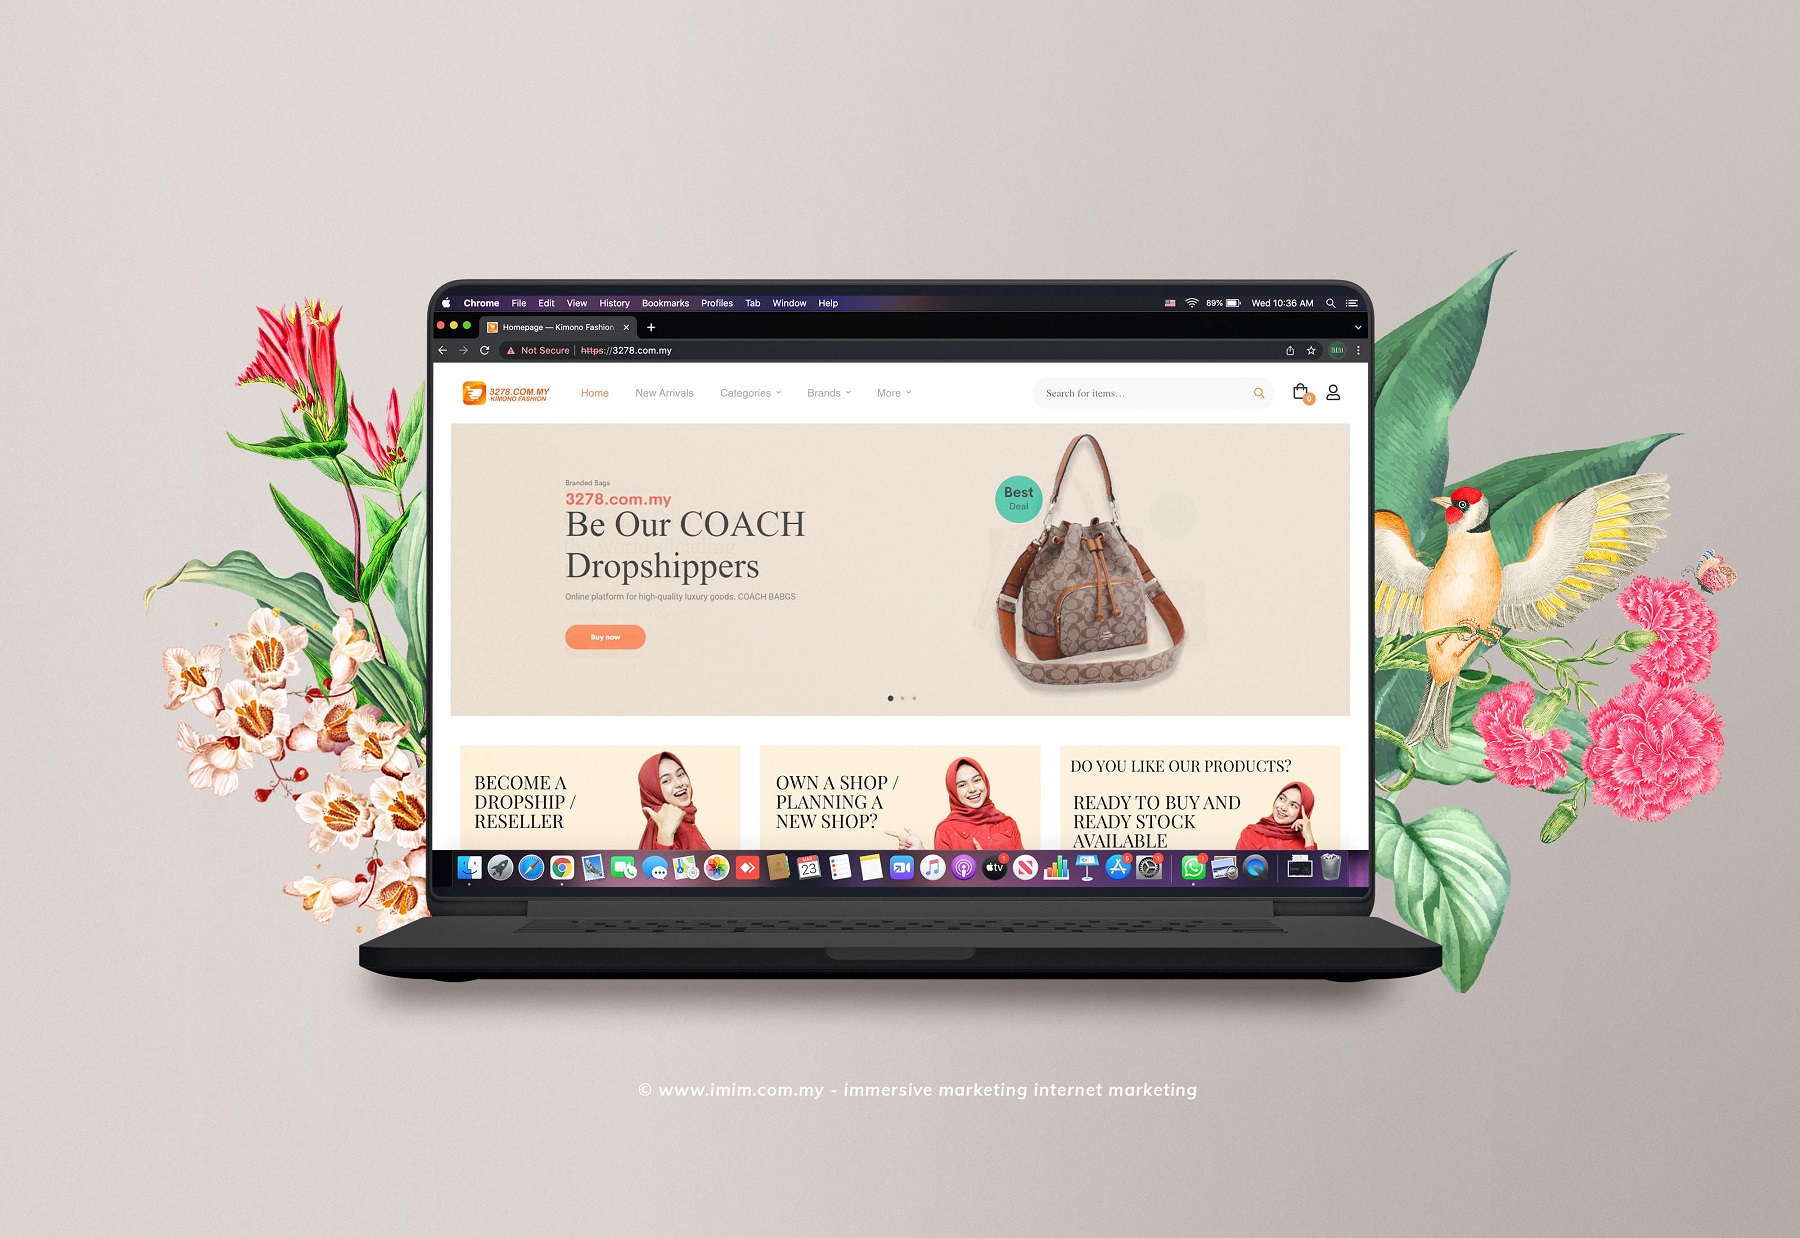 3278 Kimono Fashion Web Design Portfolio a mockup screen from website designer in Pj Malaysia by IMIM